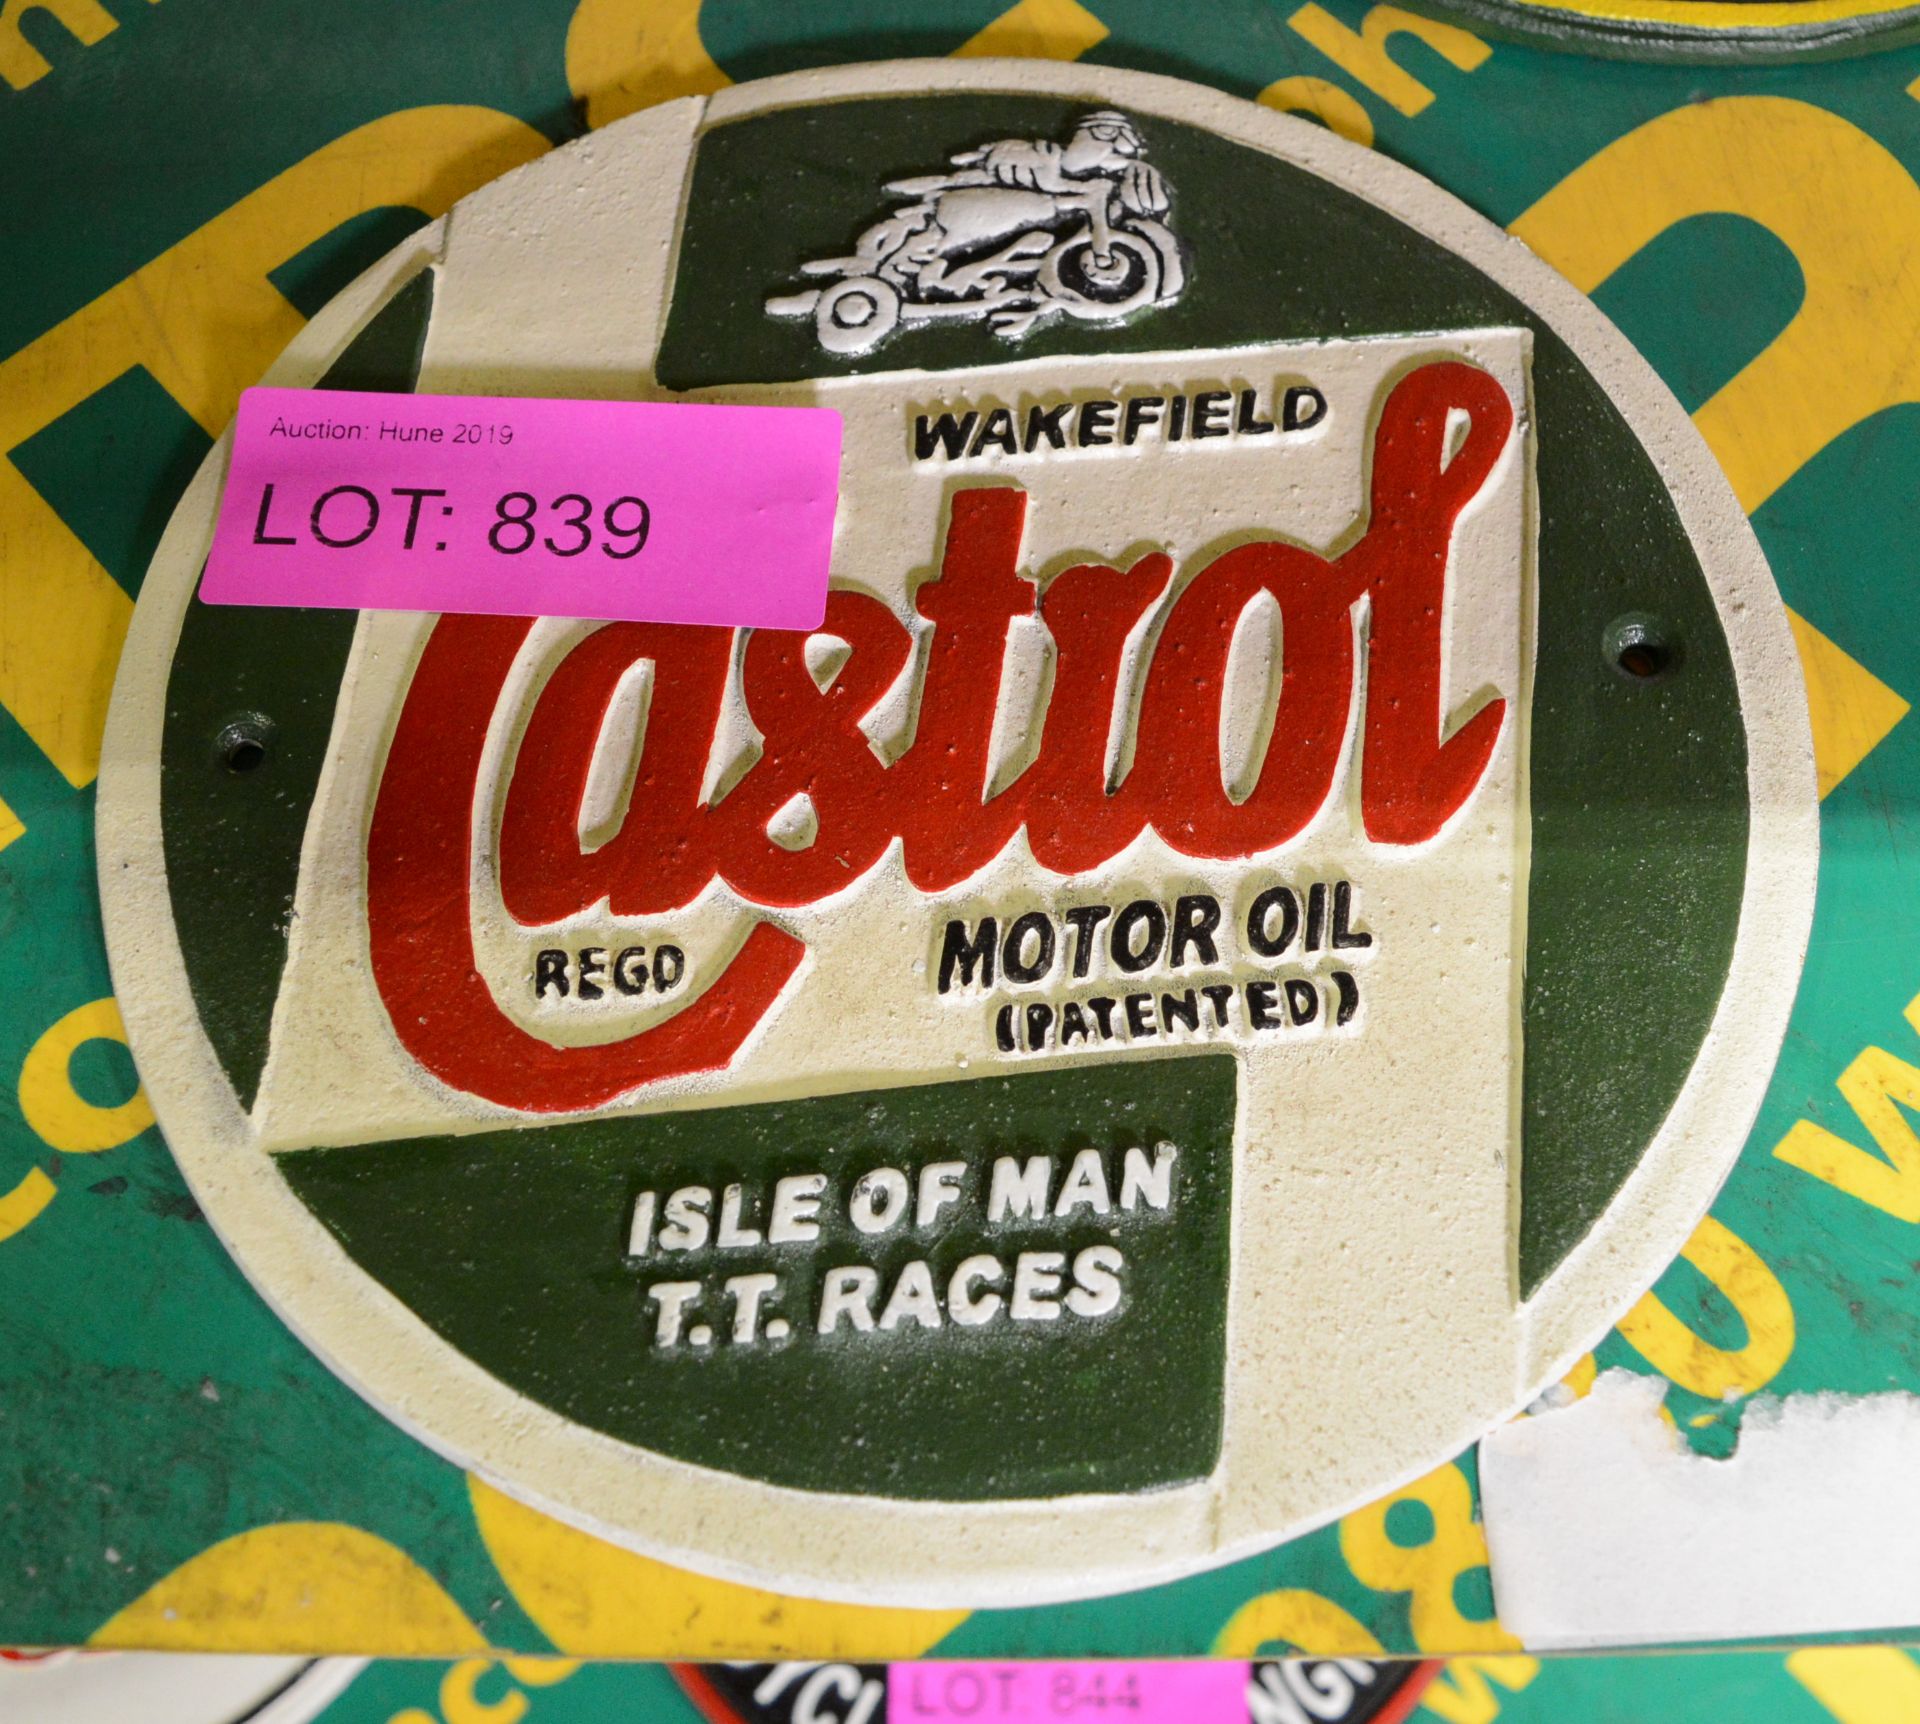 Castrol Motor Oil Cast Sign.